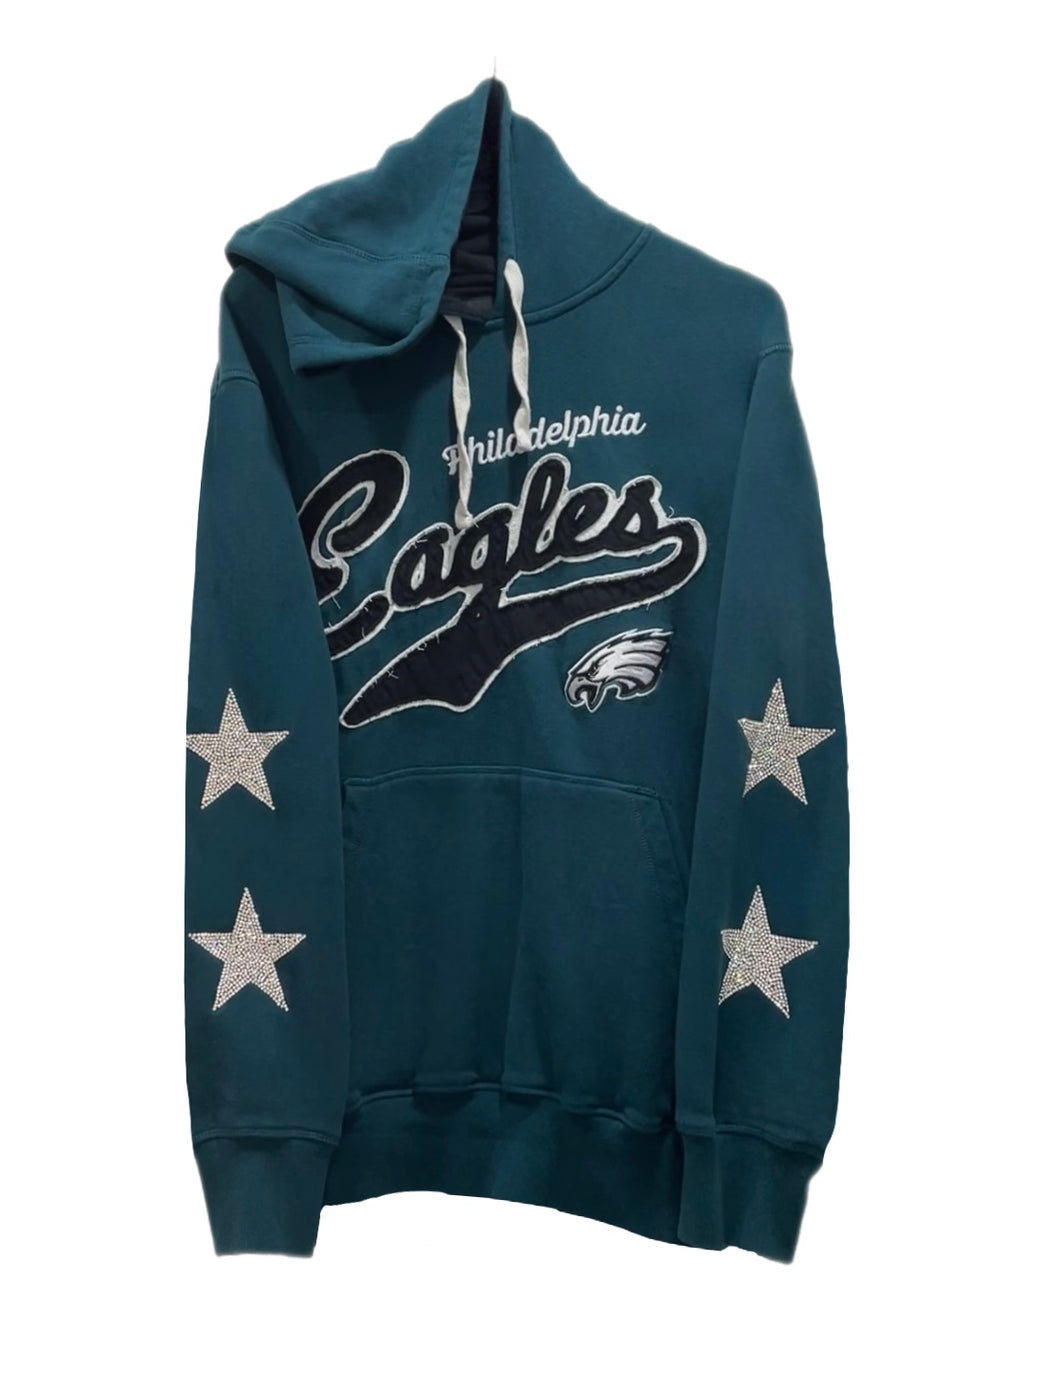 Philadelphia Eagles, NFL One of a KIND Vintage Hoodie with Crystal Star Design.